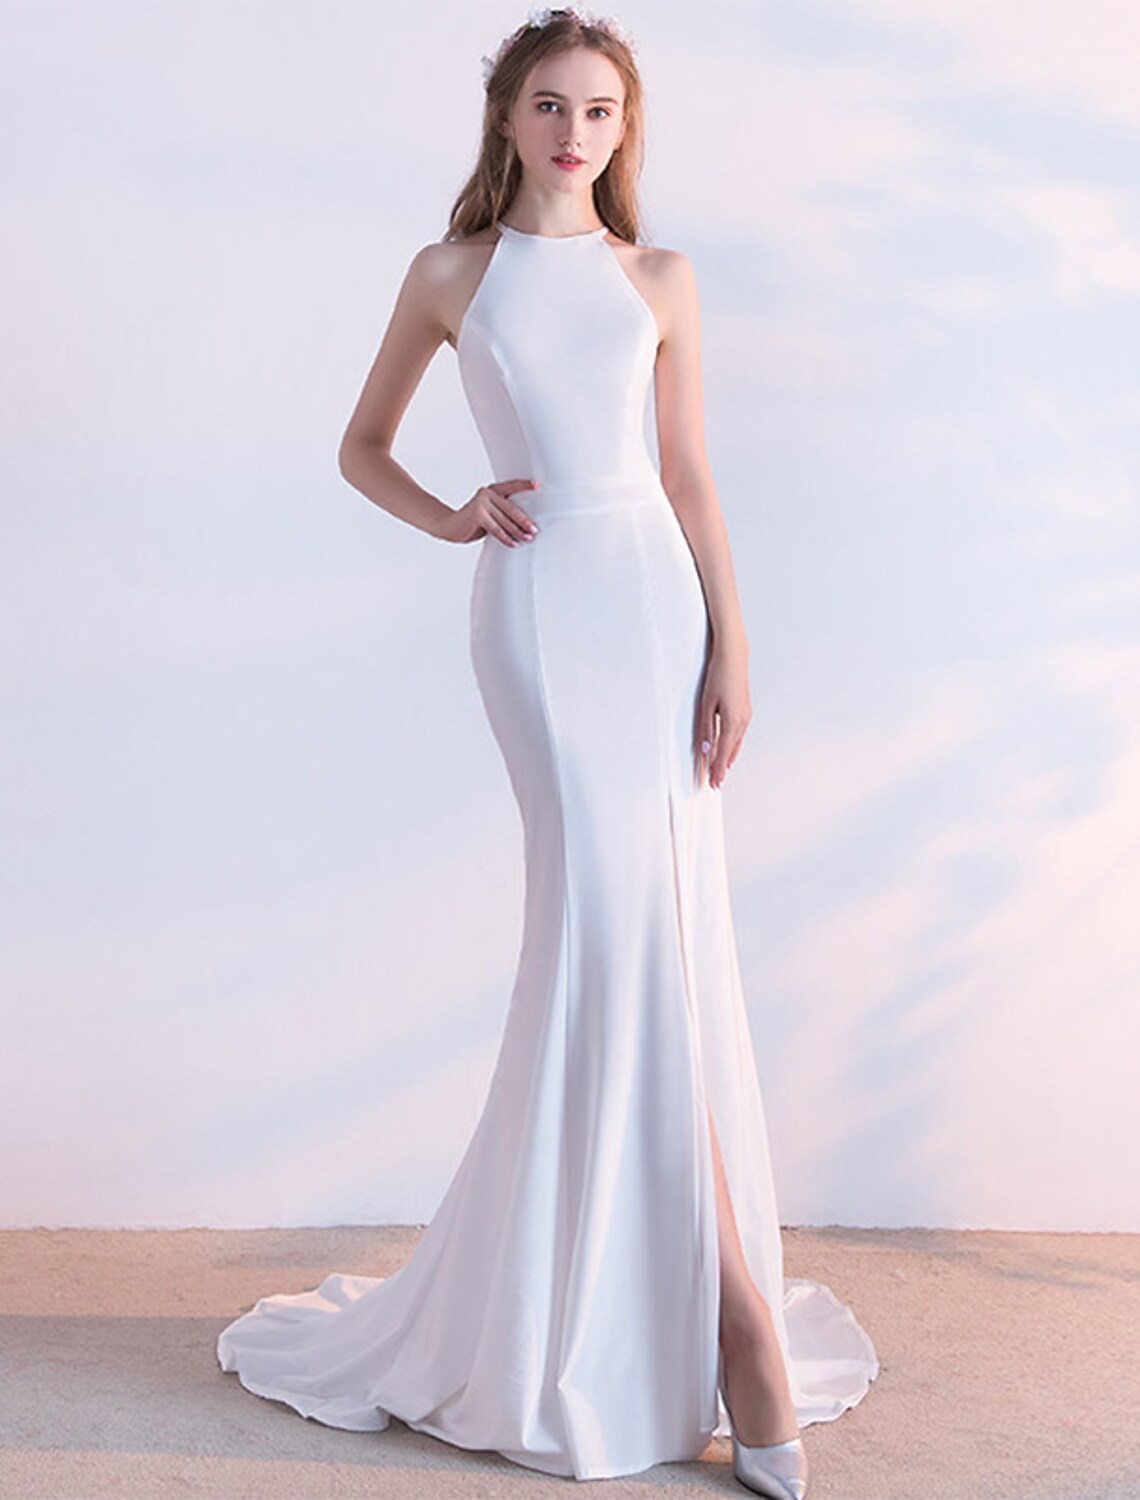 Mermaid / Trumpet Evening Gown Minimalist Dress Prom Sweep / Brush Train Sleeveless Halter Stretch Fabric with Sleek